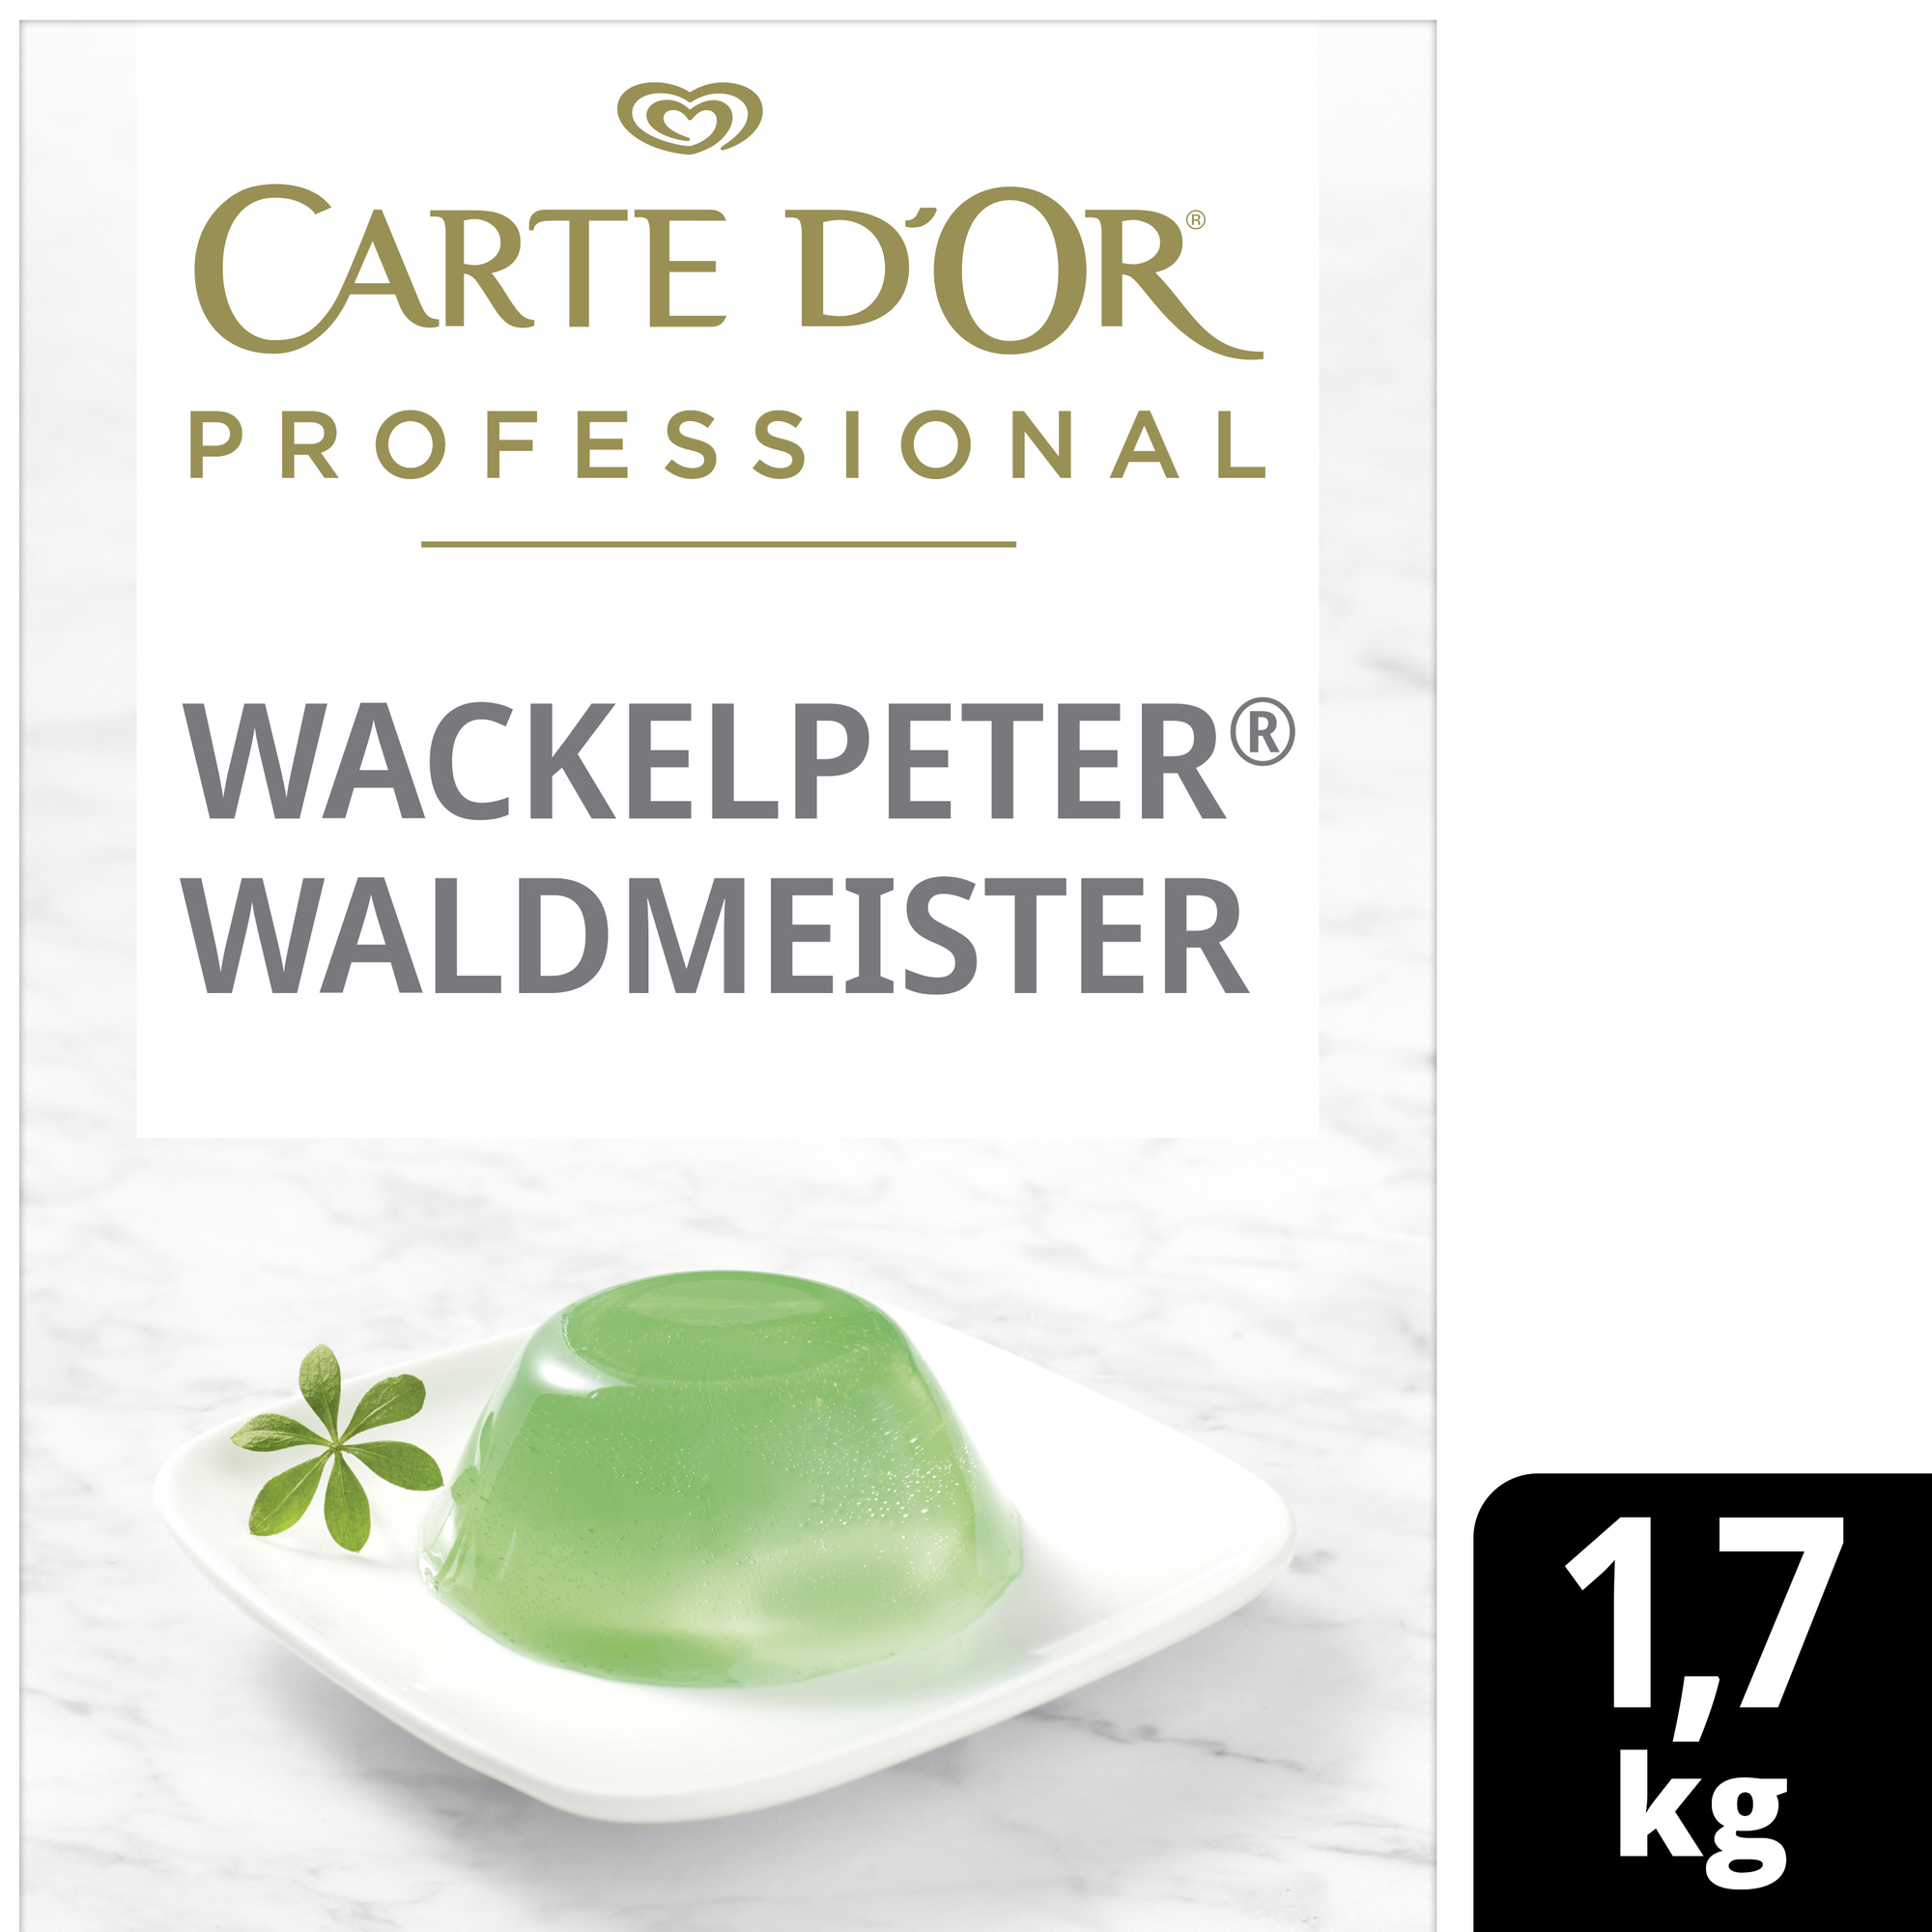 Wackelpeter Waldmeister 1700g